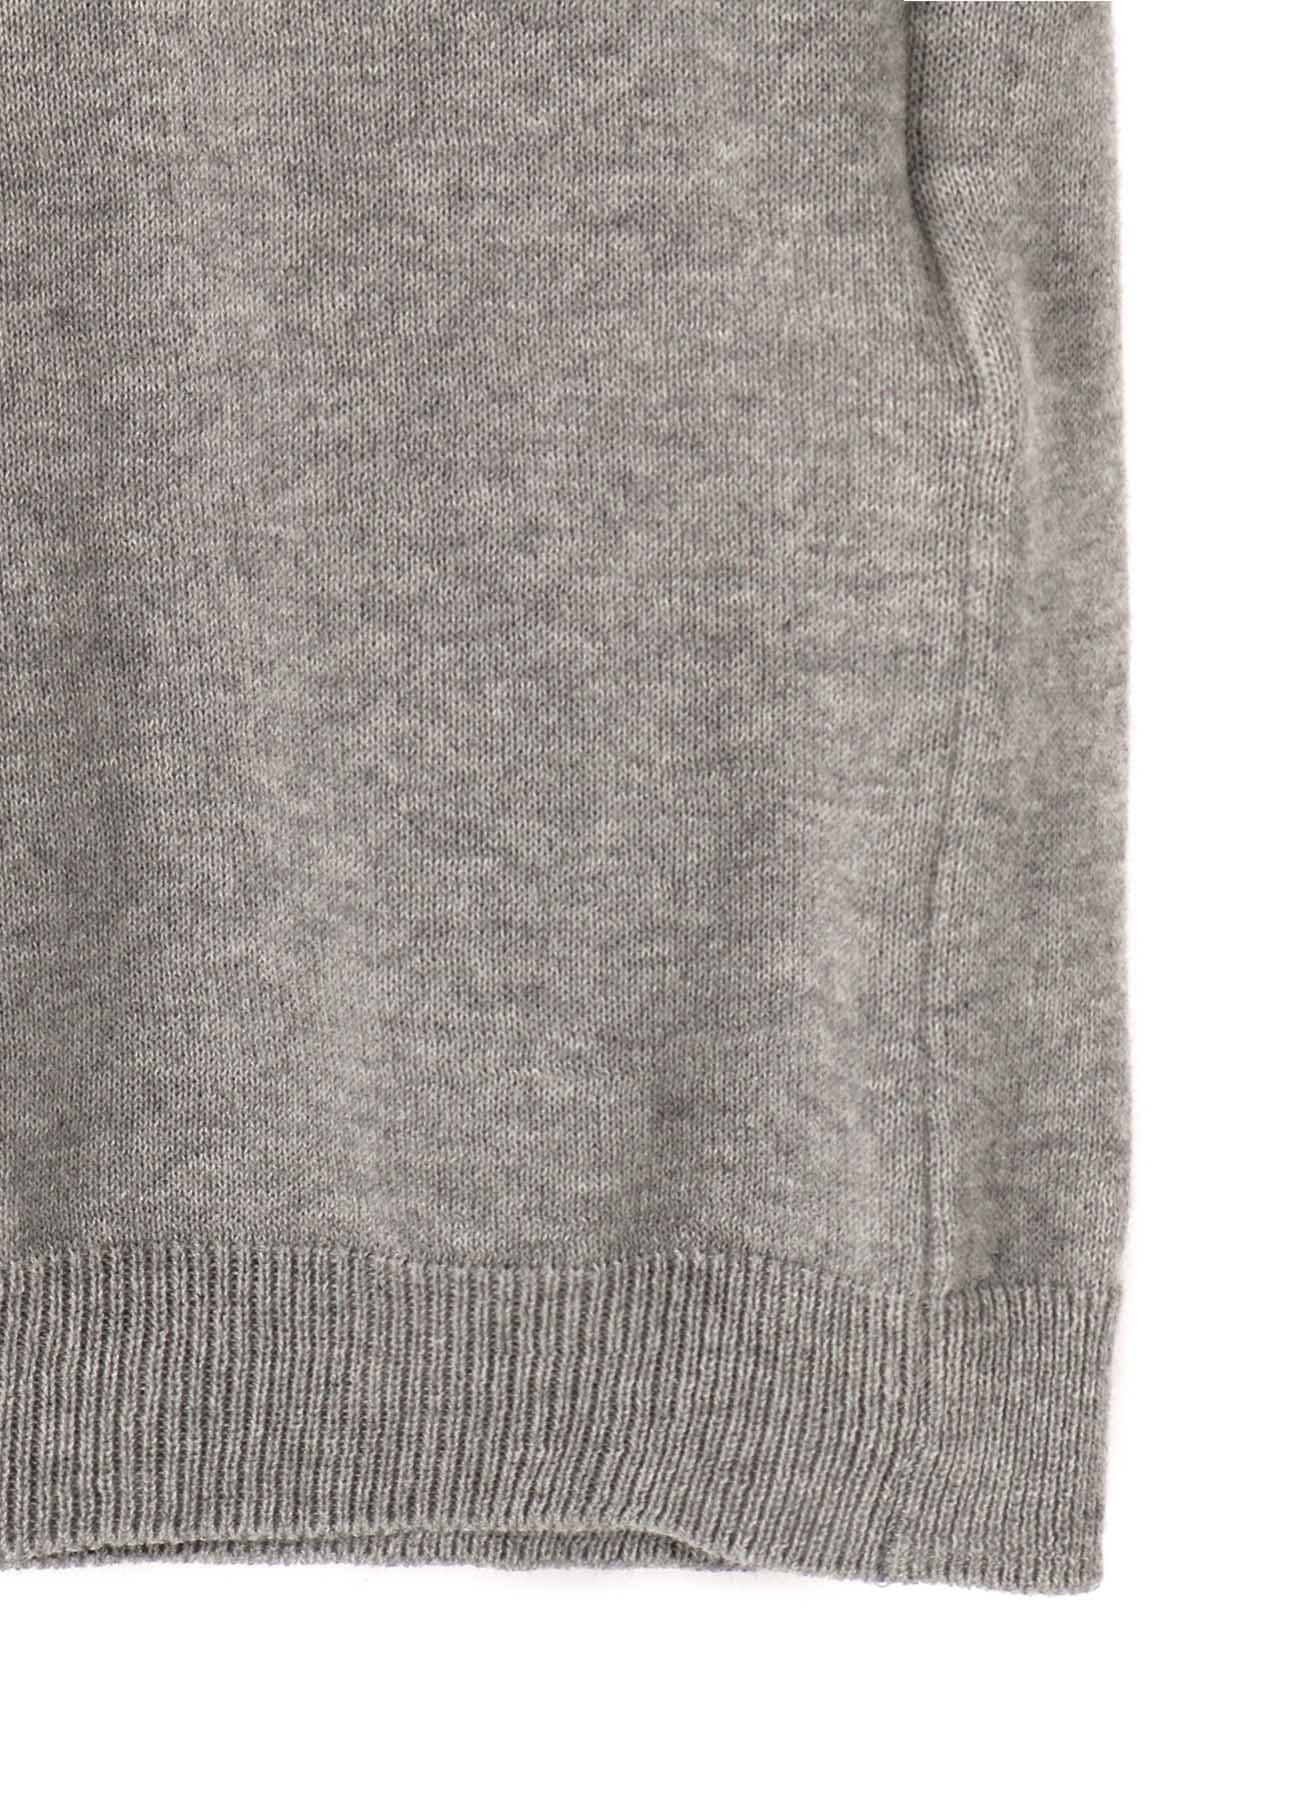 40/2 Cotton Strong twisted Plain Stitch 2Way Sweater